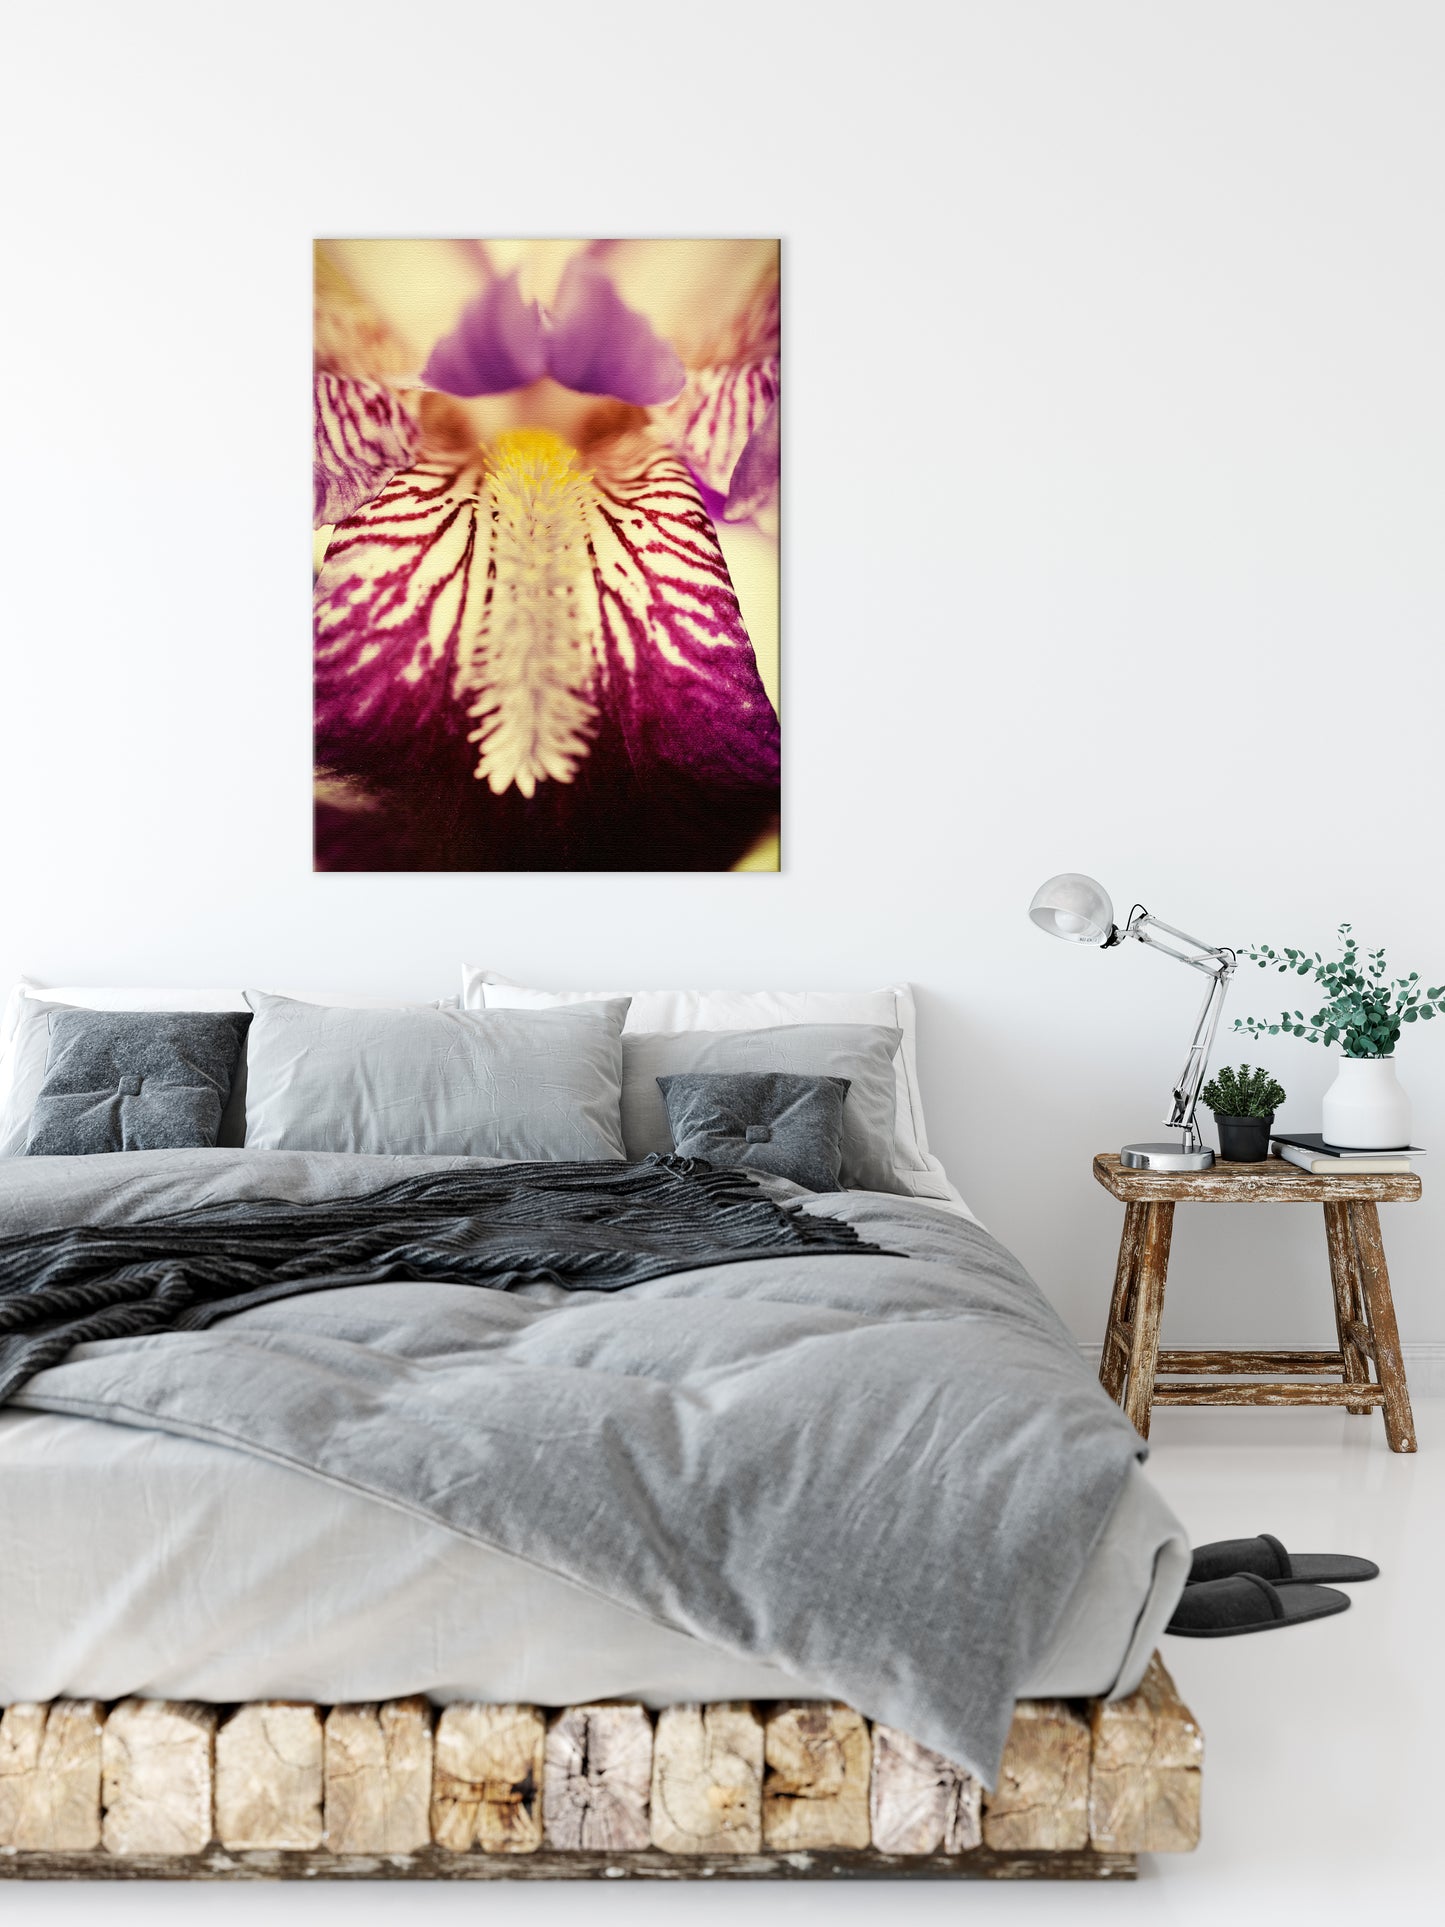 Large Canvas Art For Bedroom: Antiqued Iris - Botanical / Floral / Flora / Flowers / Nature Photograph Canvas Wall Art Print - Artwork